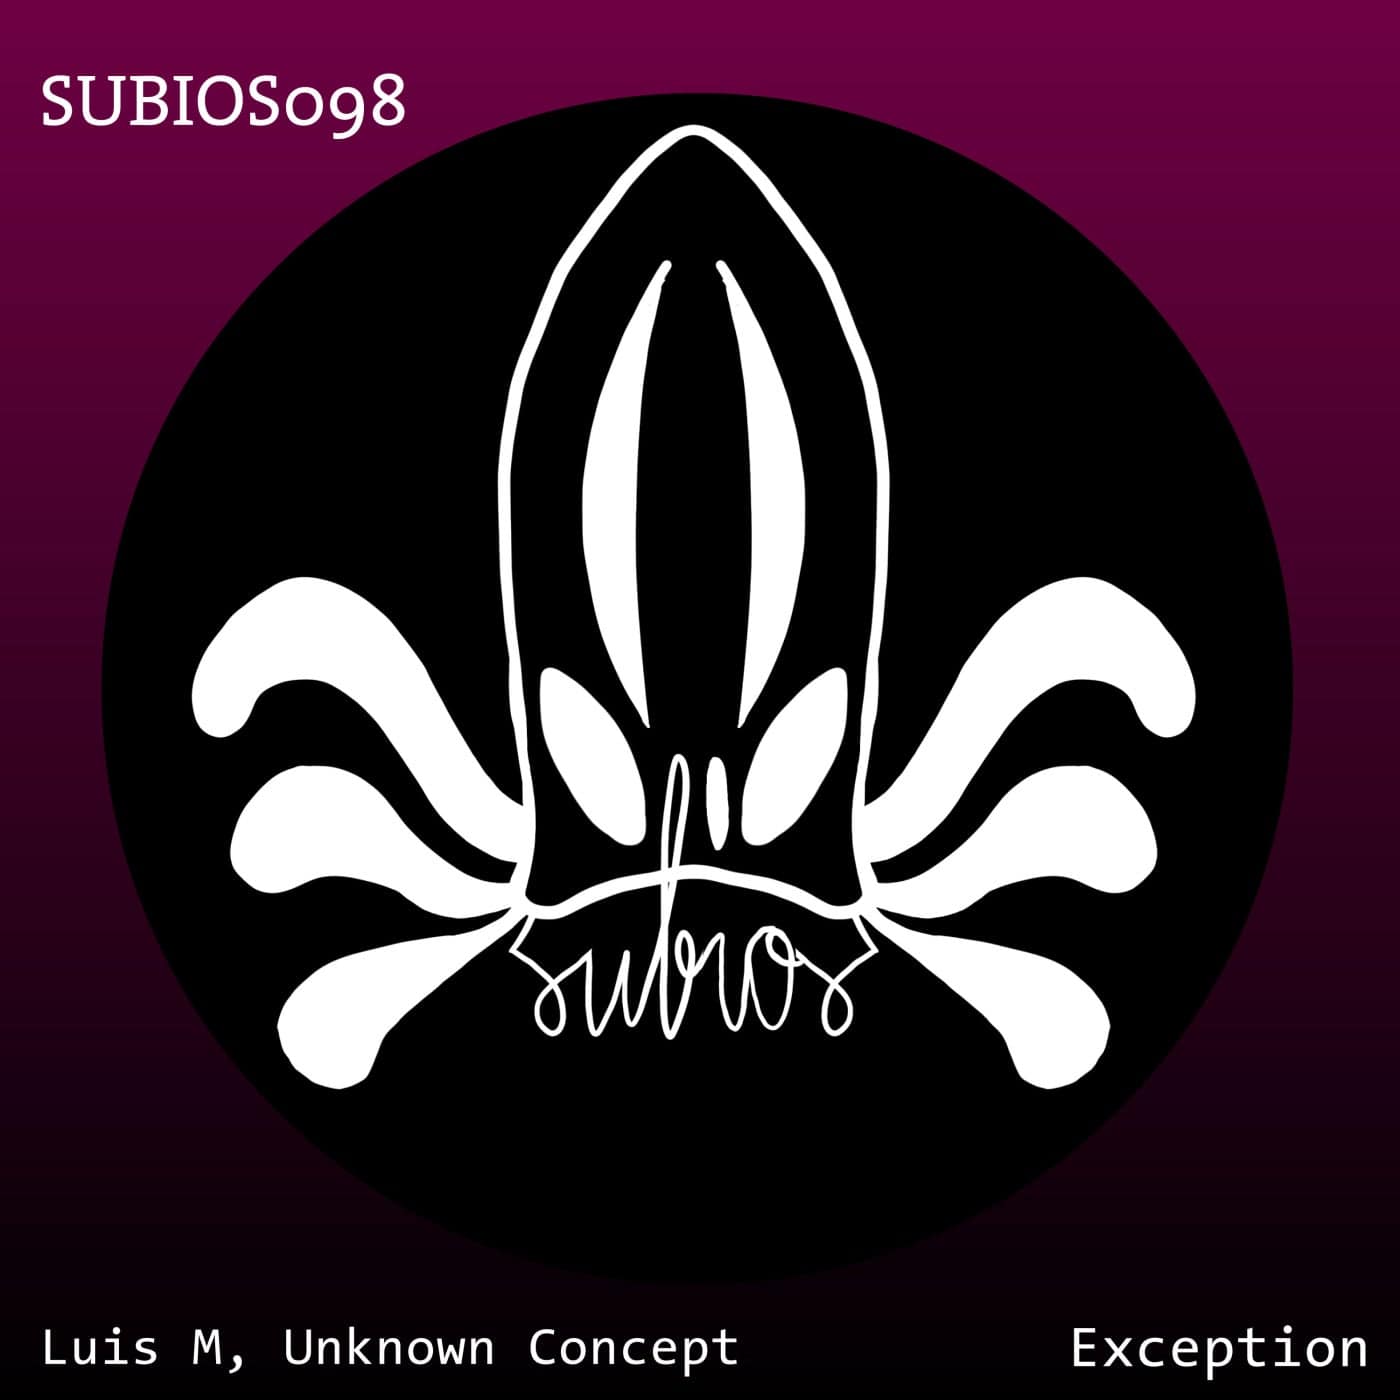 image cover: Luis M, Unknown Concept - Exception / SUBIOS098